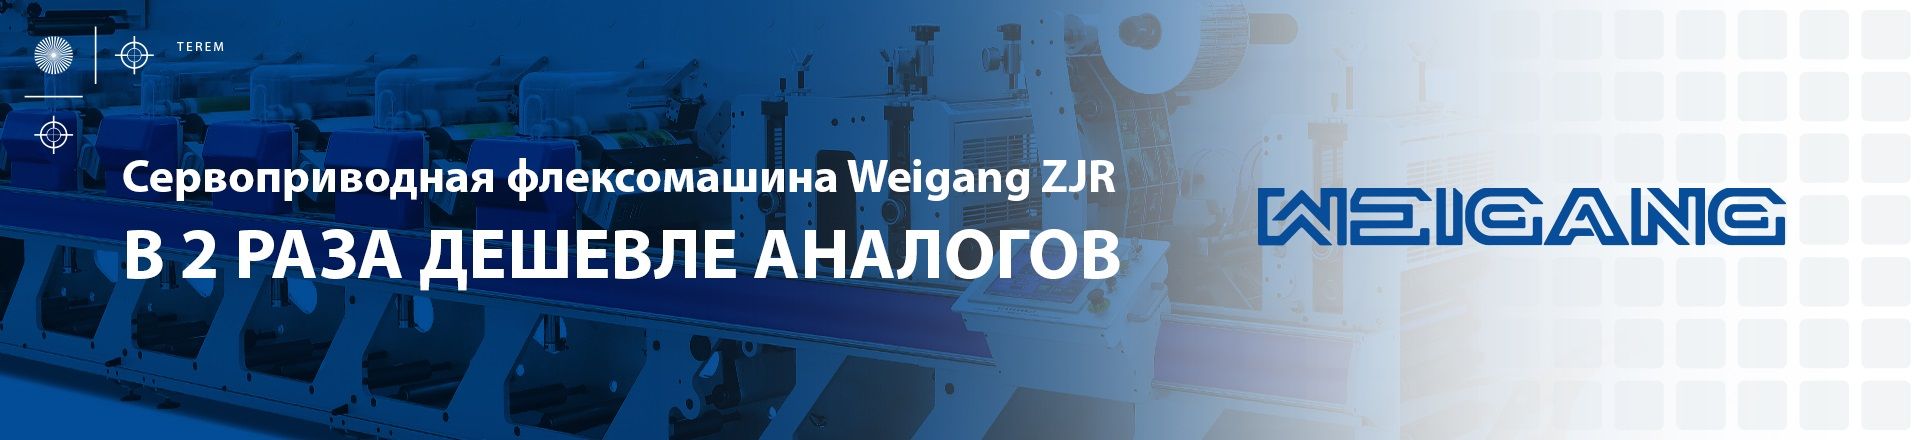 Weigang ZJR: в 2 раза дешевле аналогов (zone 3)